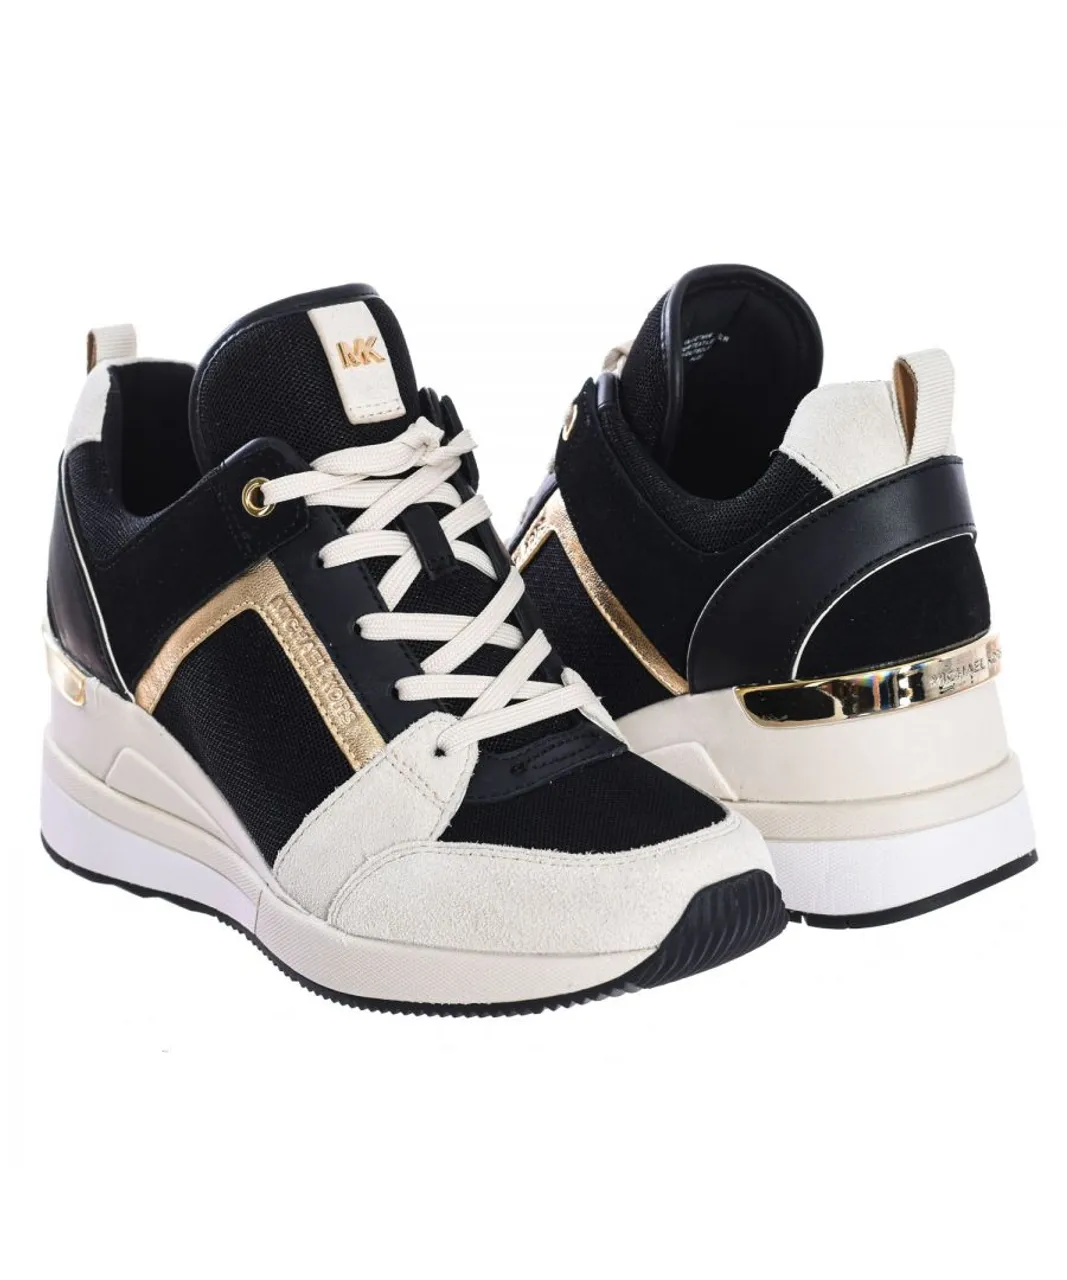 Michael Kors Womenss Georgie Tricolor R9GEFS1S Sneaker Shoe - Black Leather